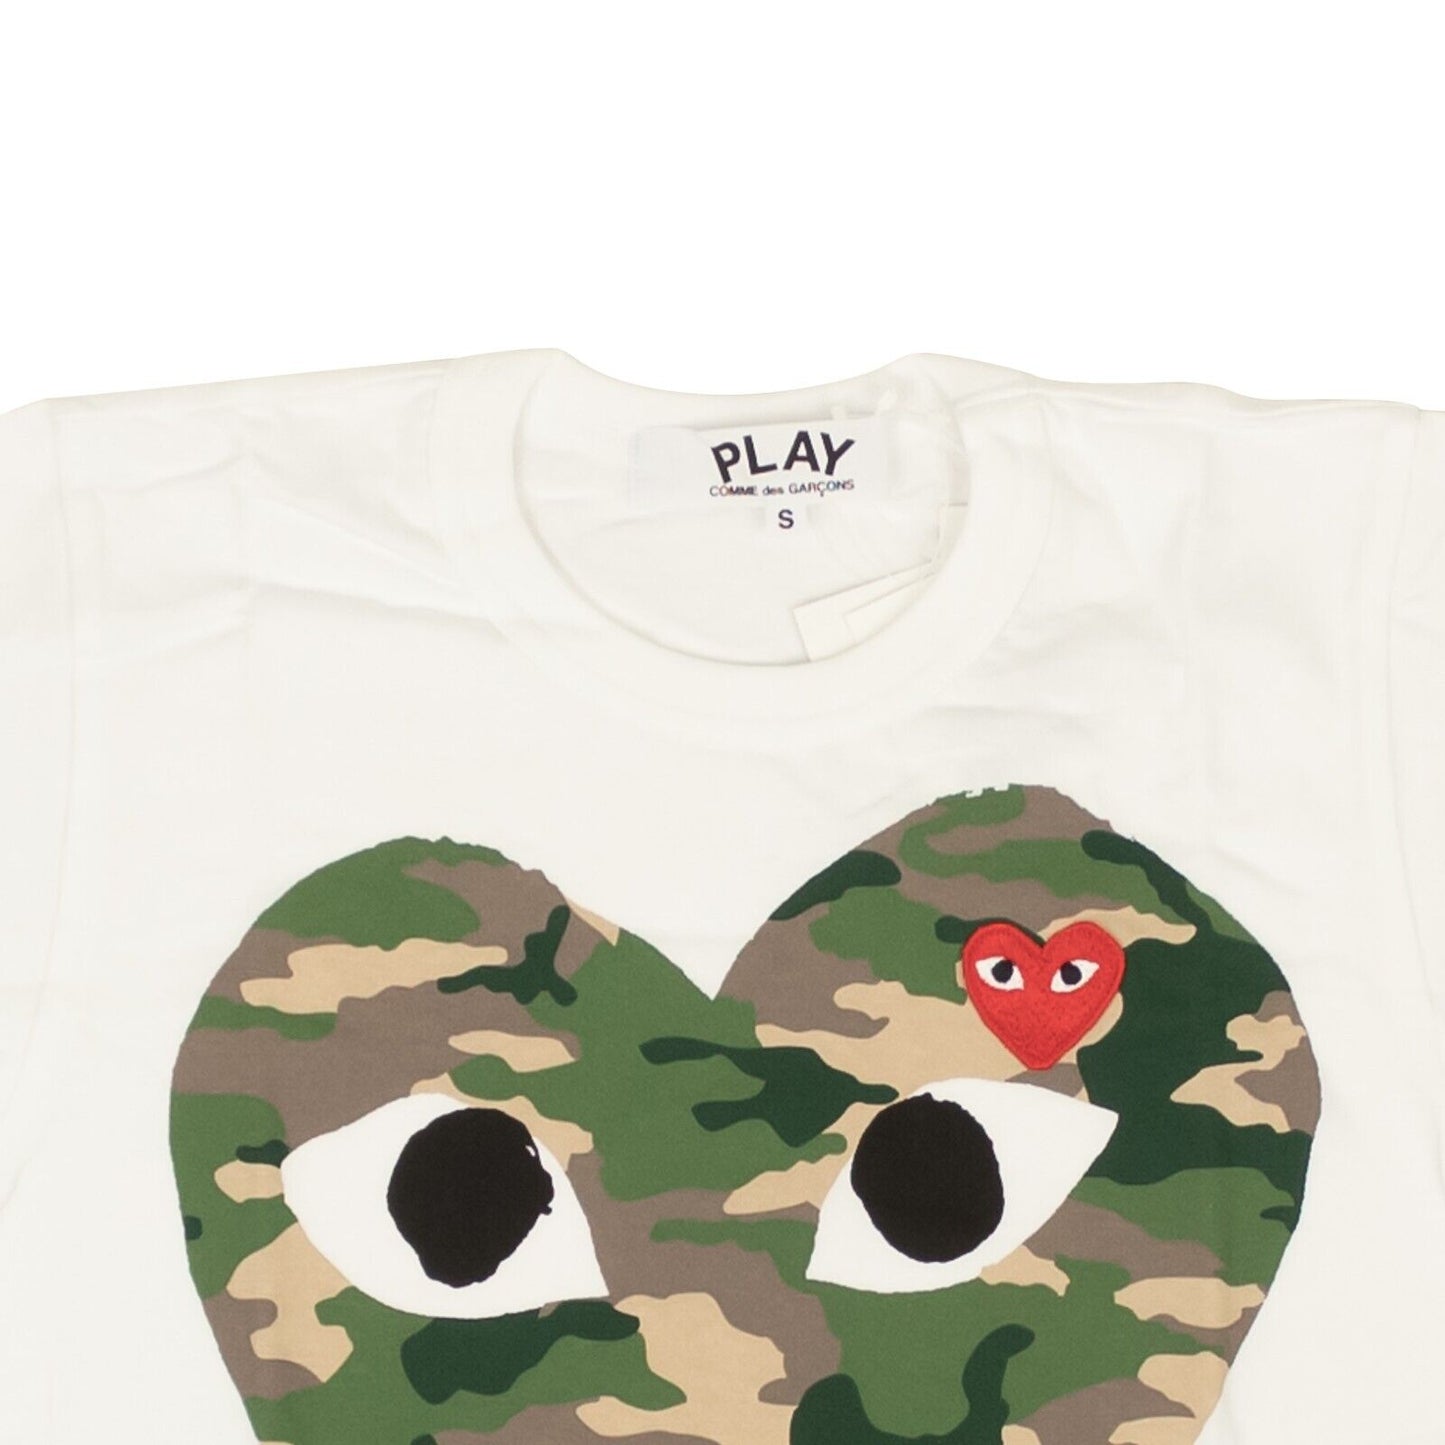 Comme Des Garçons Play Big Camouflage Heart T-Shirt - White